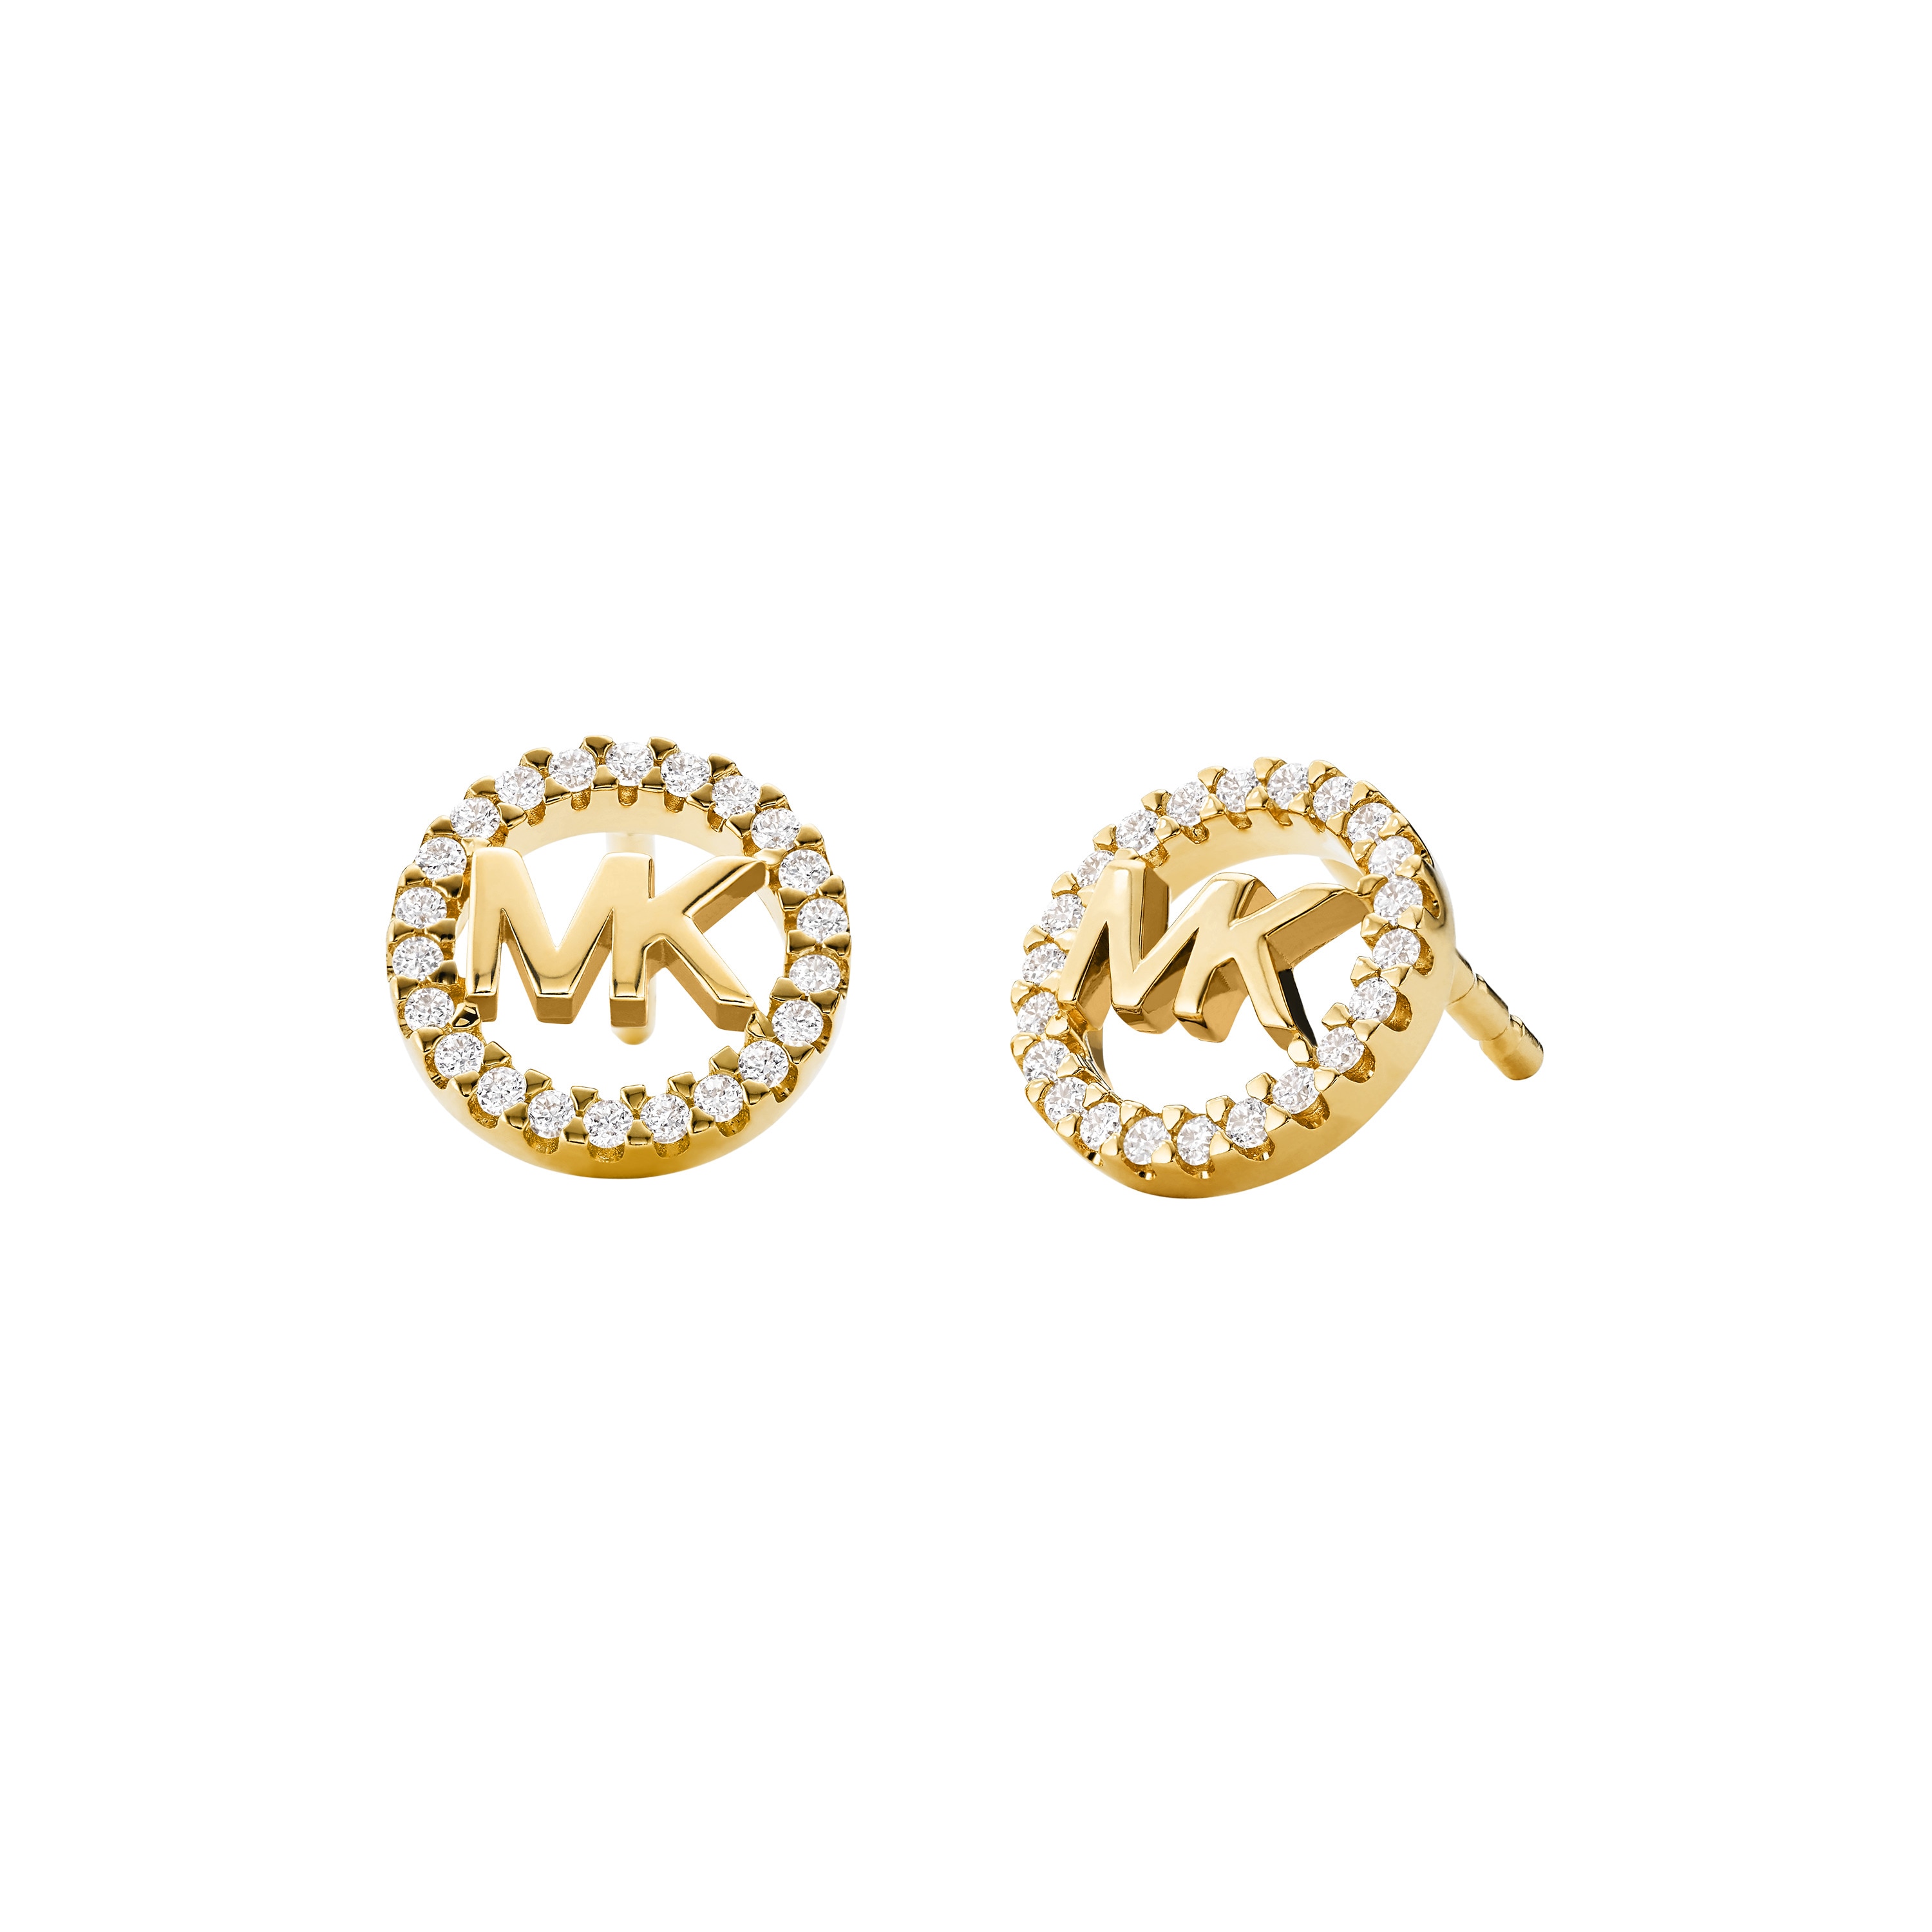 Premium earrings gold